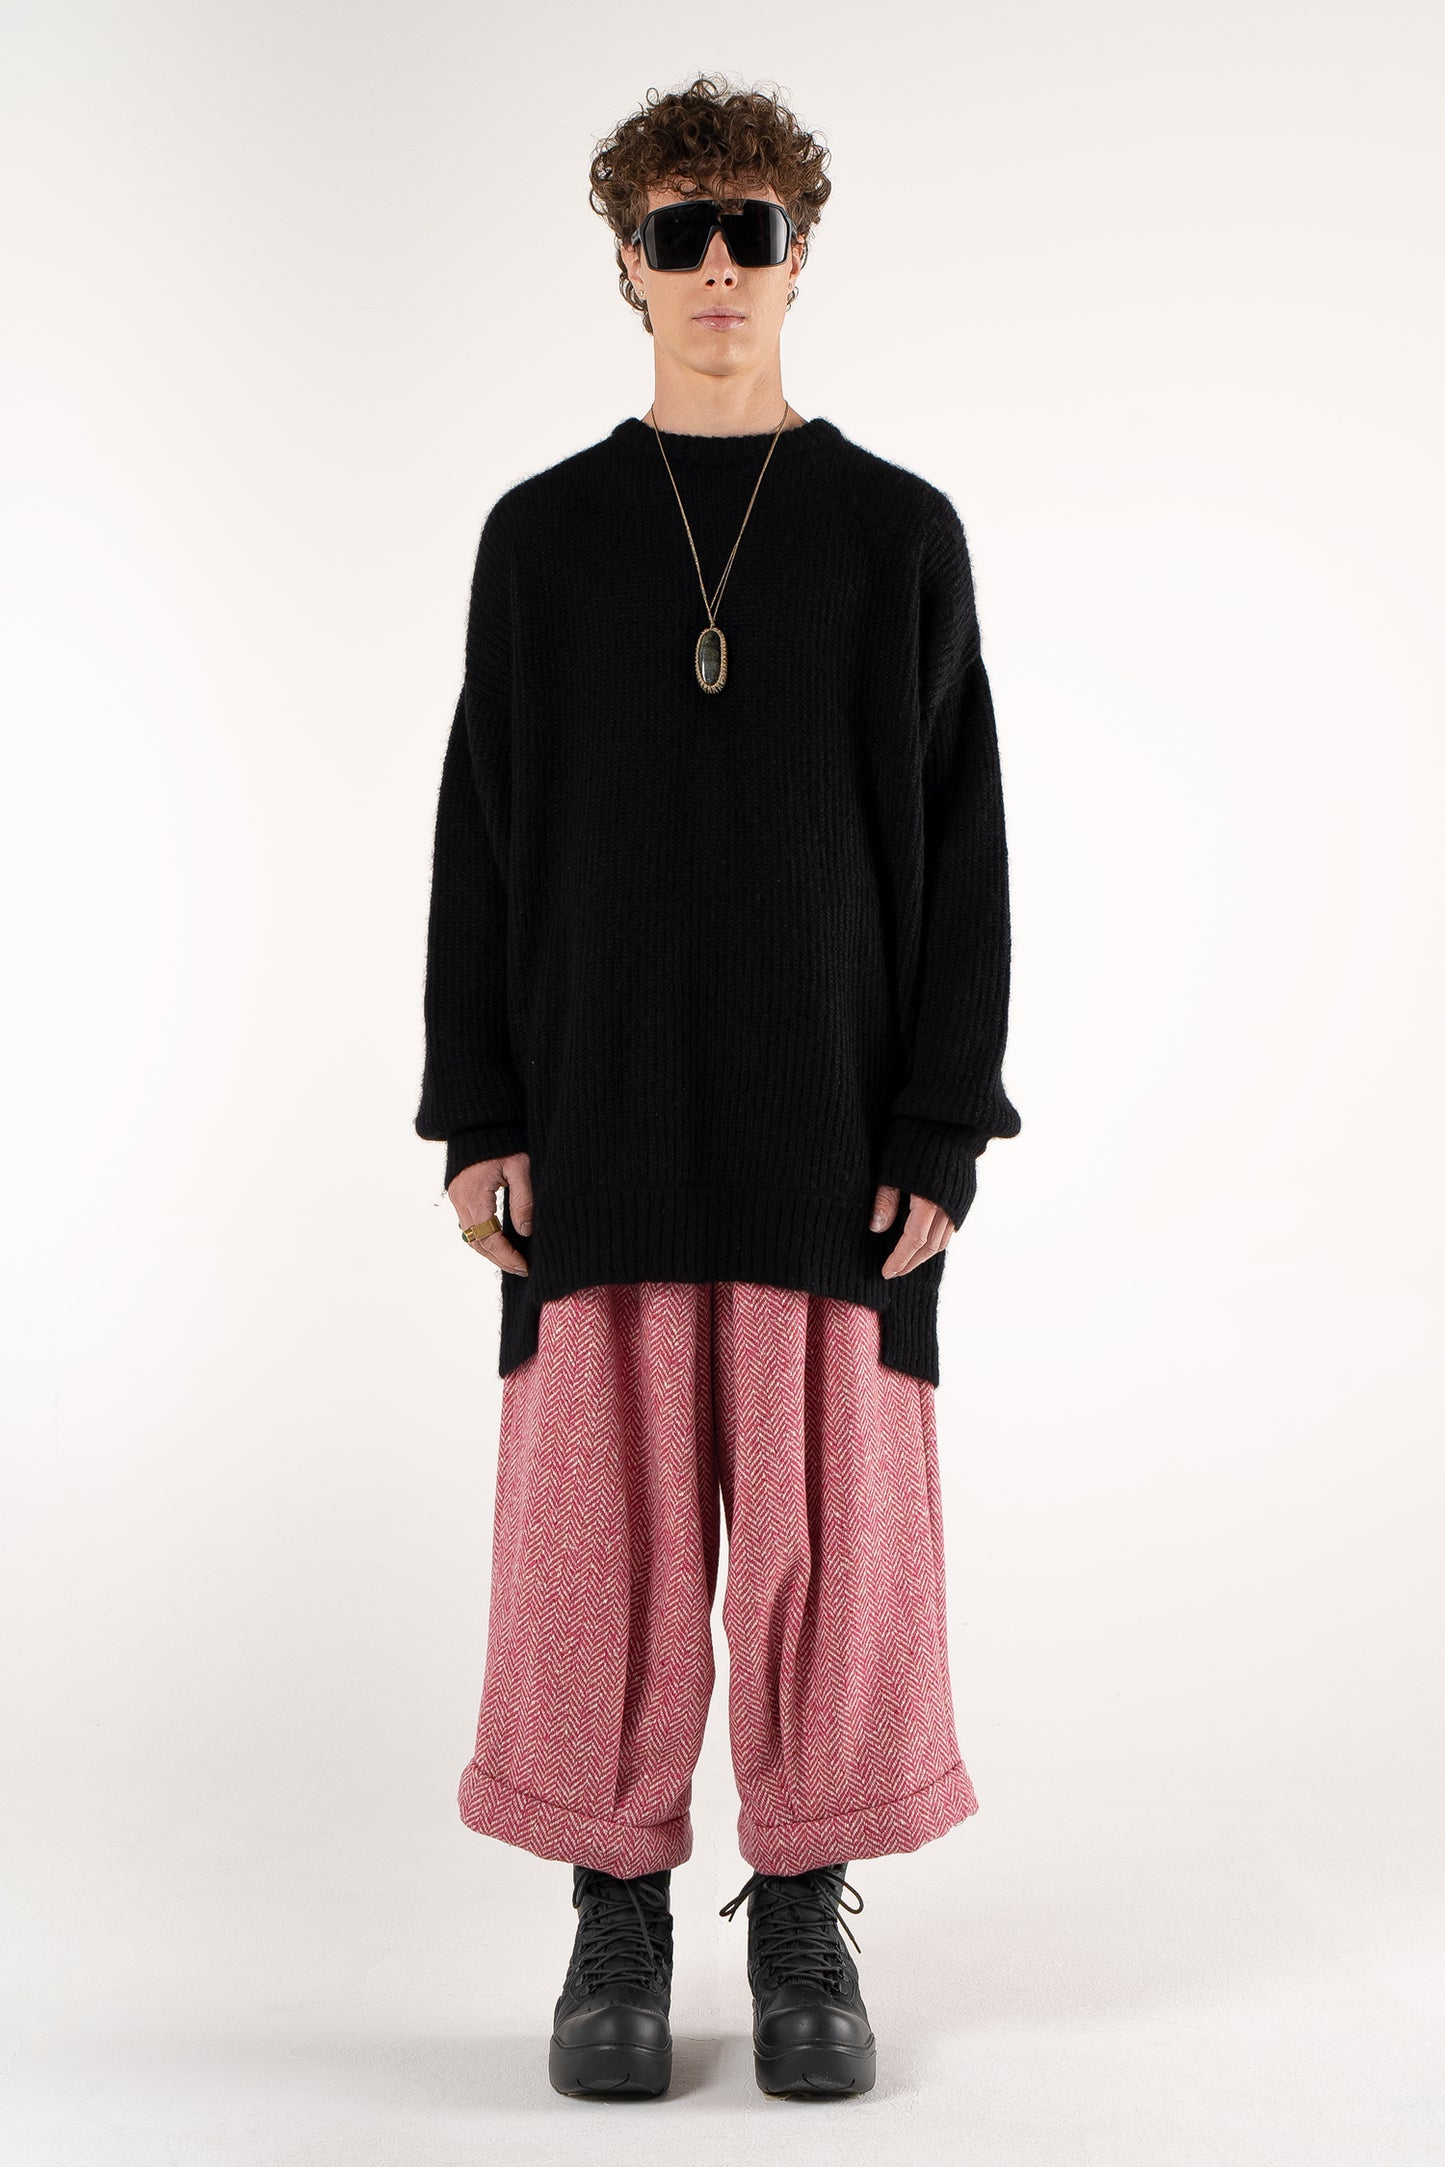 4Size Oversized Pants – Wool Herringbone Pink/White